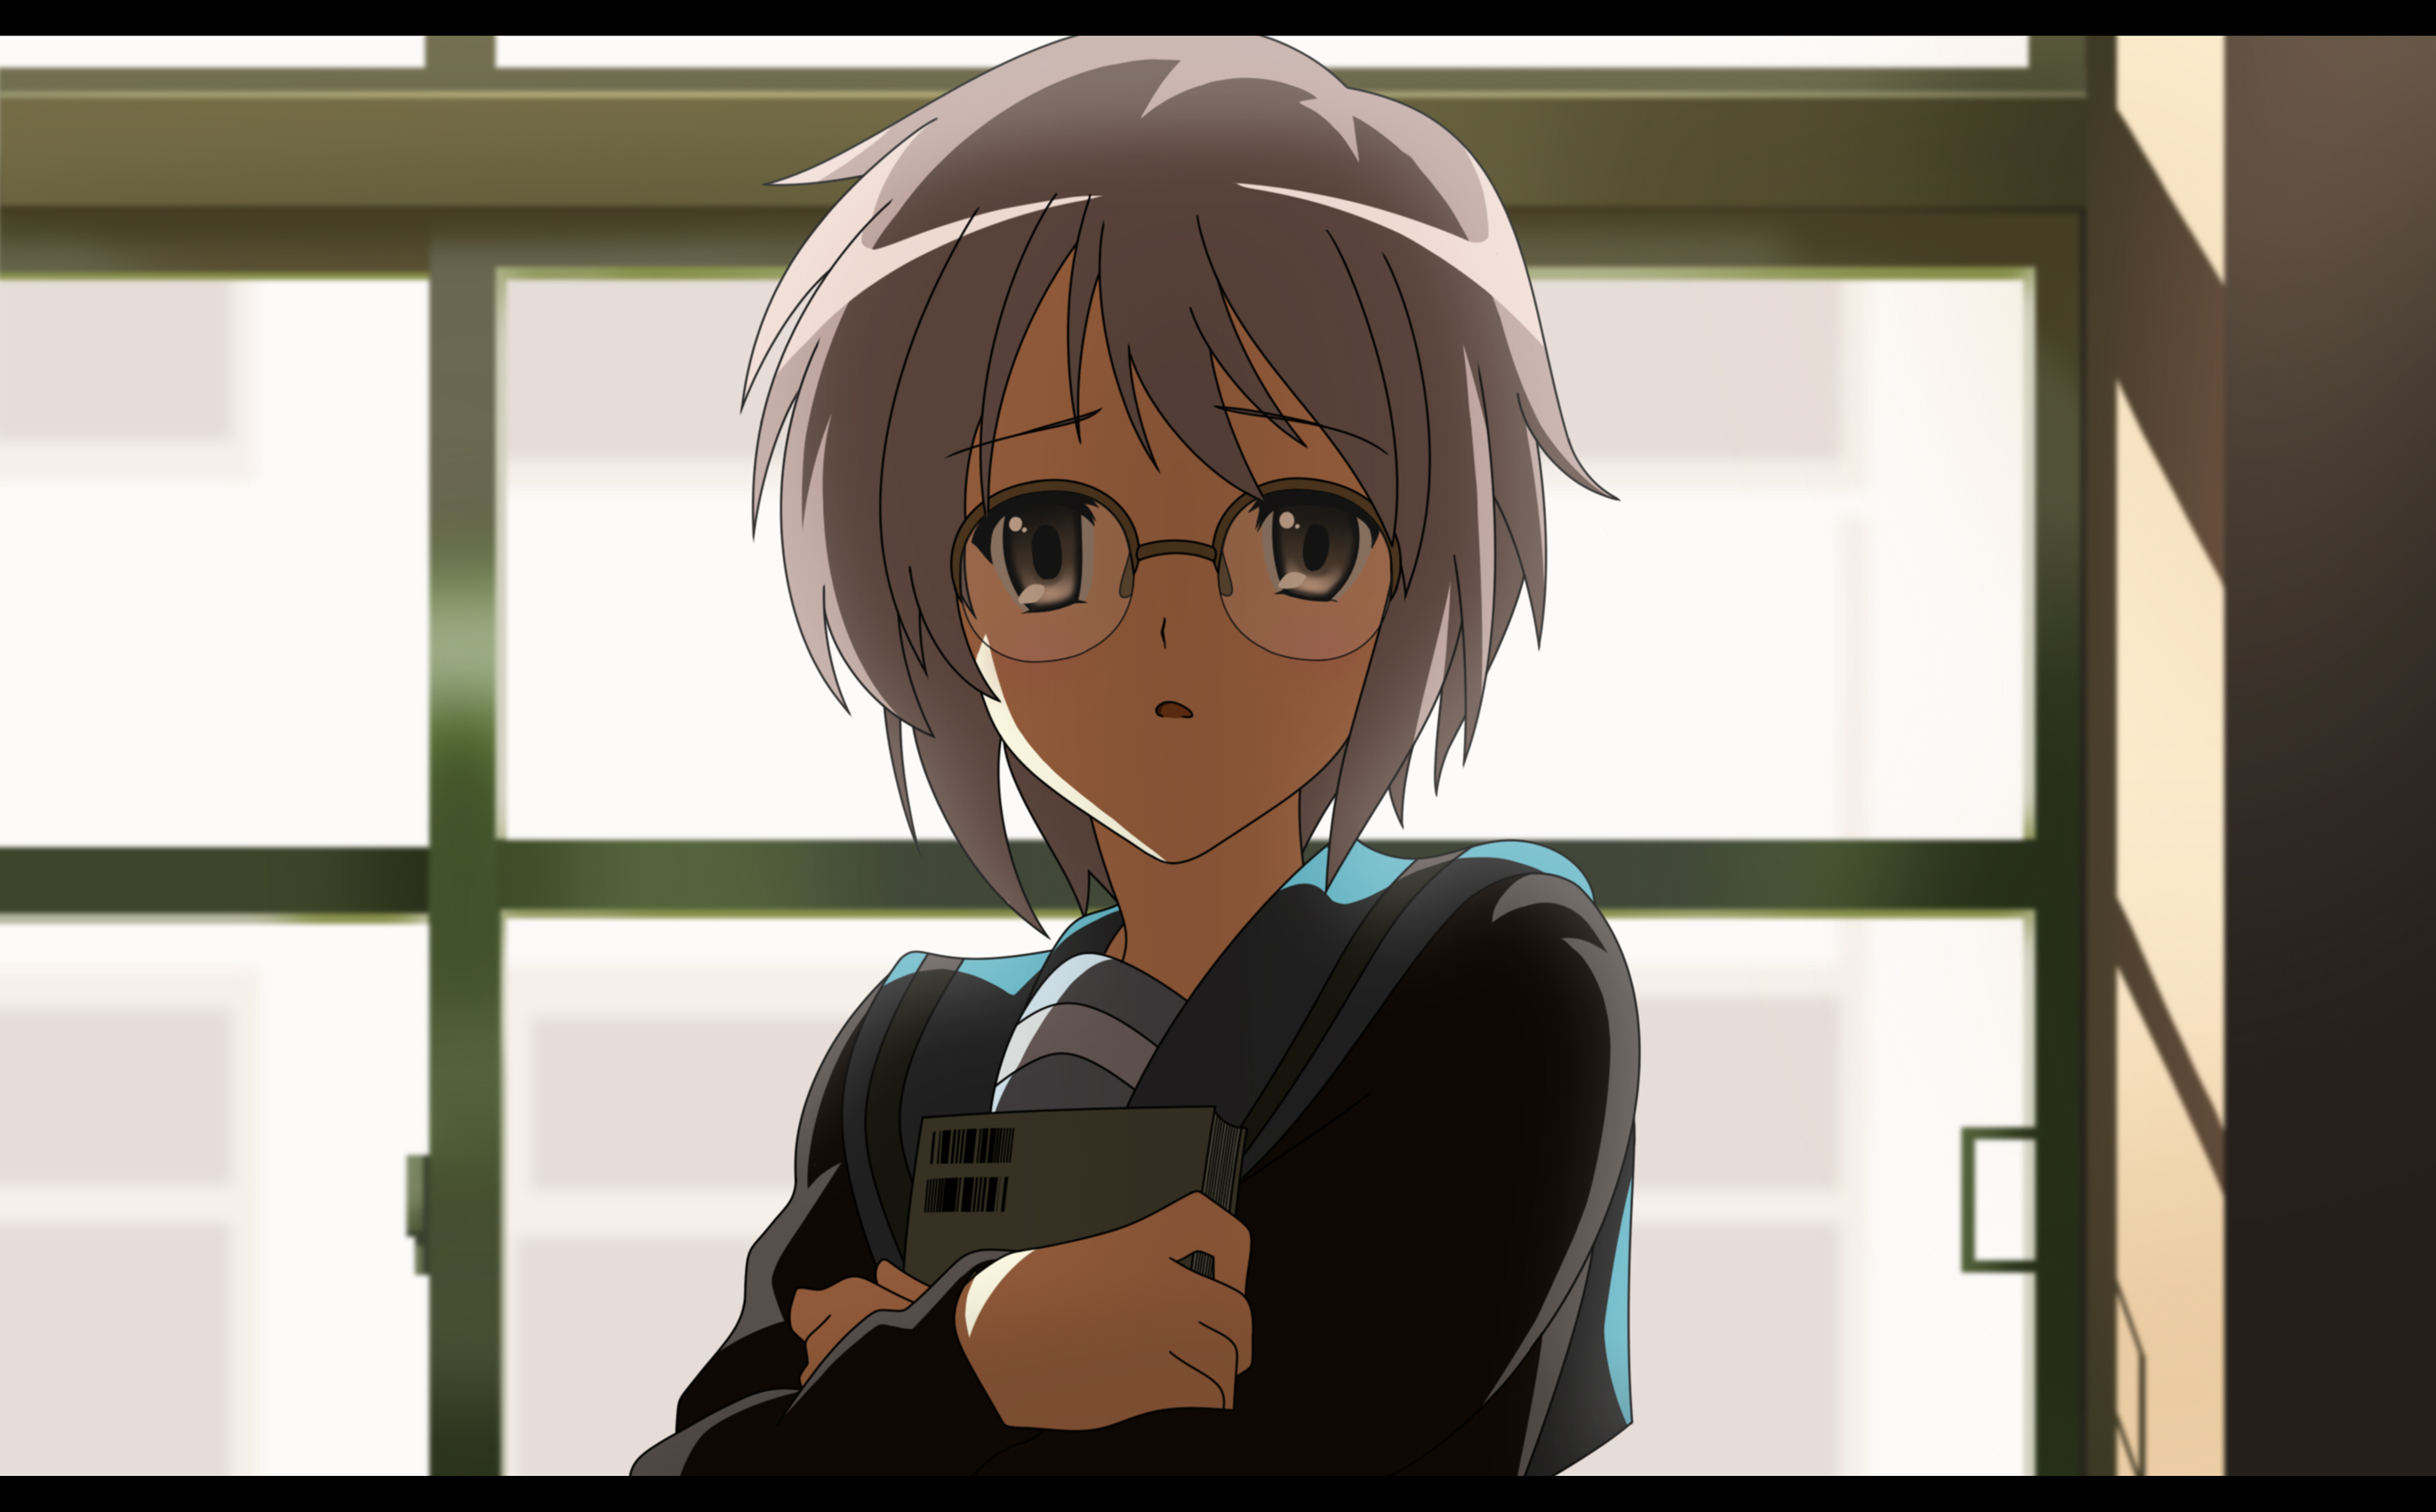 Descarga gratuita de fondo de pantalla para móvil de Animado, Suzumiya Haruhi No Yūutsu, Yuki Nagato.